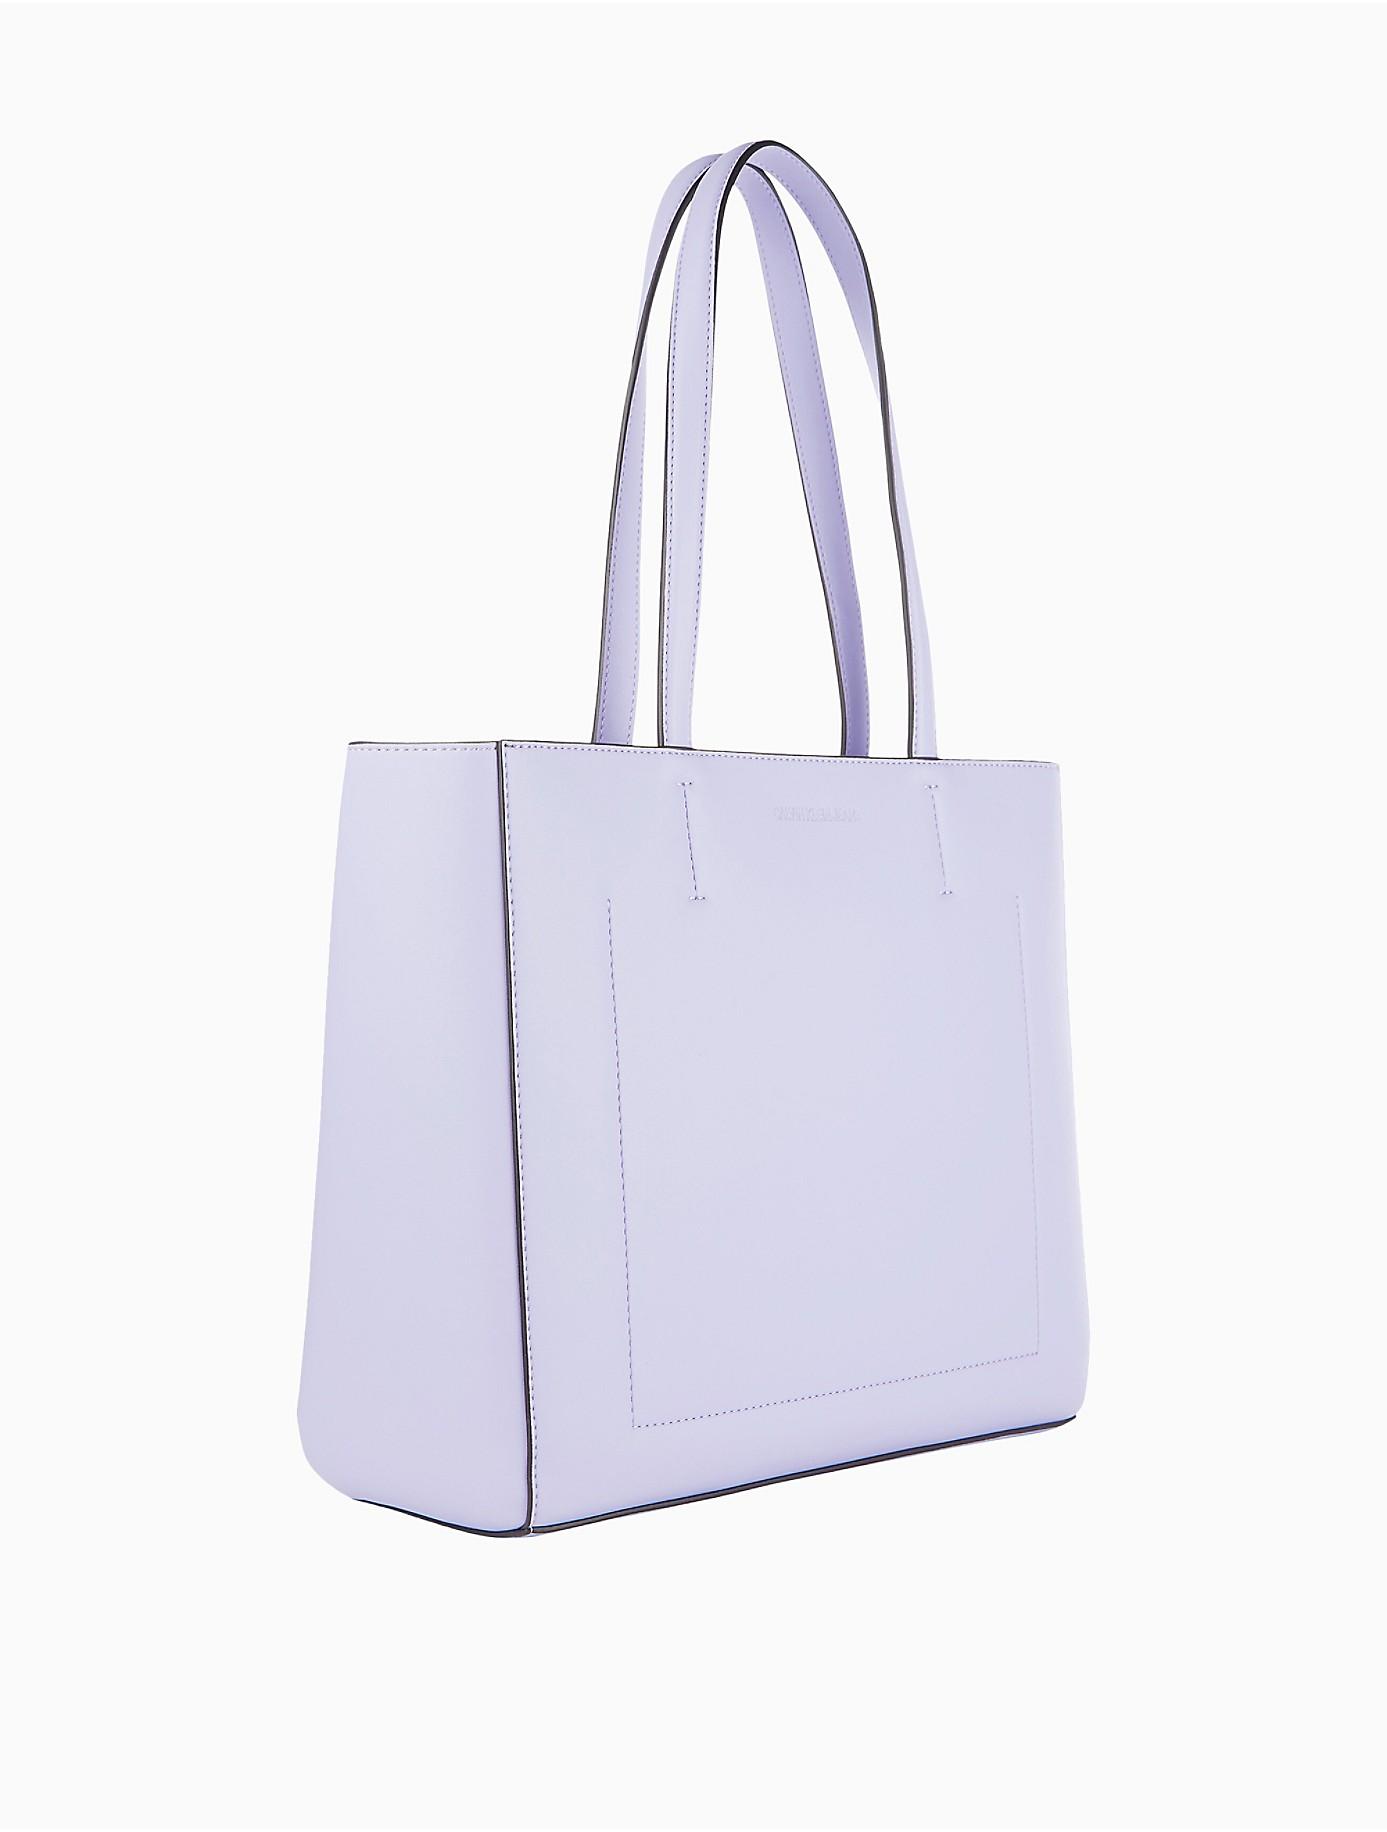 Calvin Klein Monogram Logo Shopper Tote Bag in Purple - Lyst